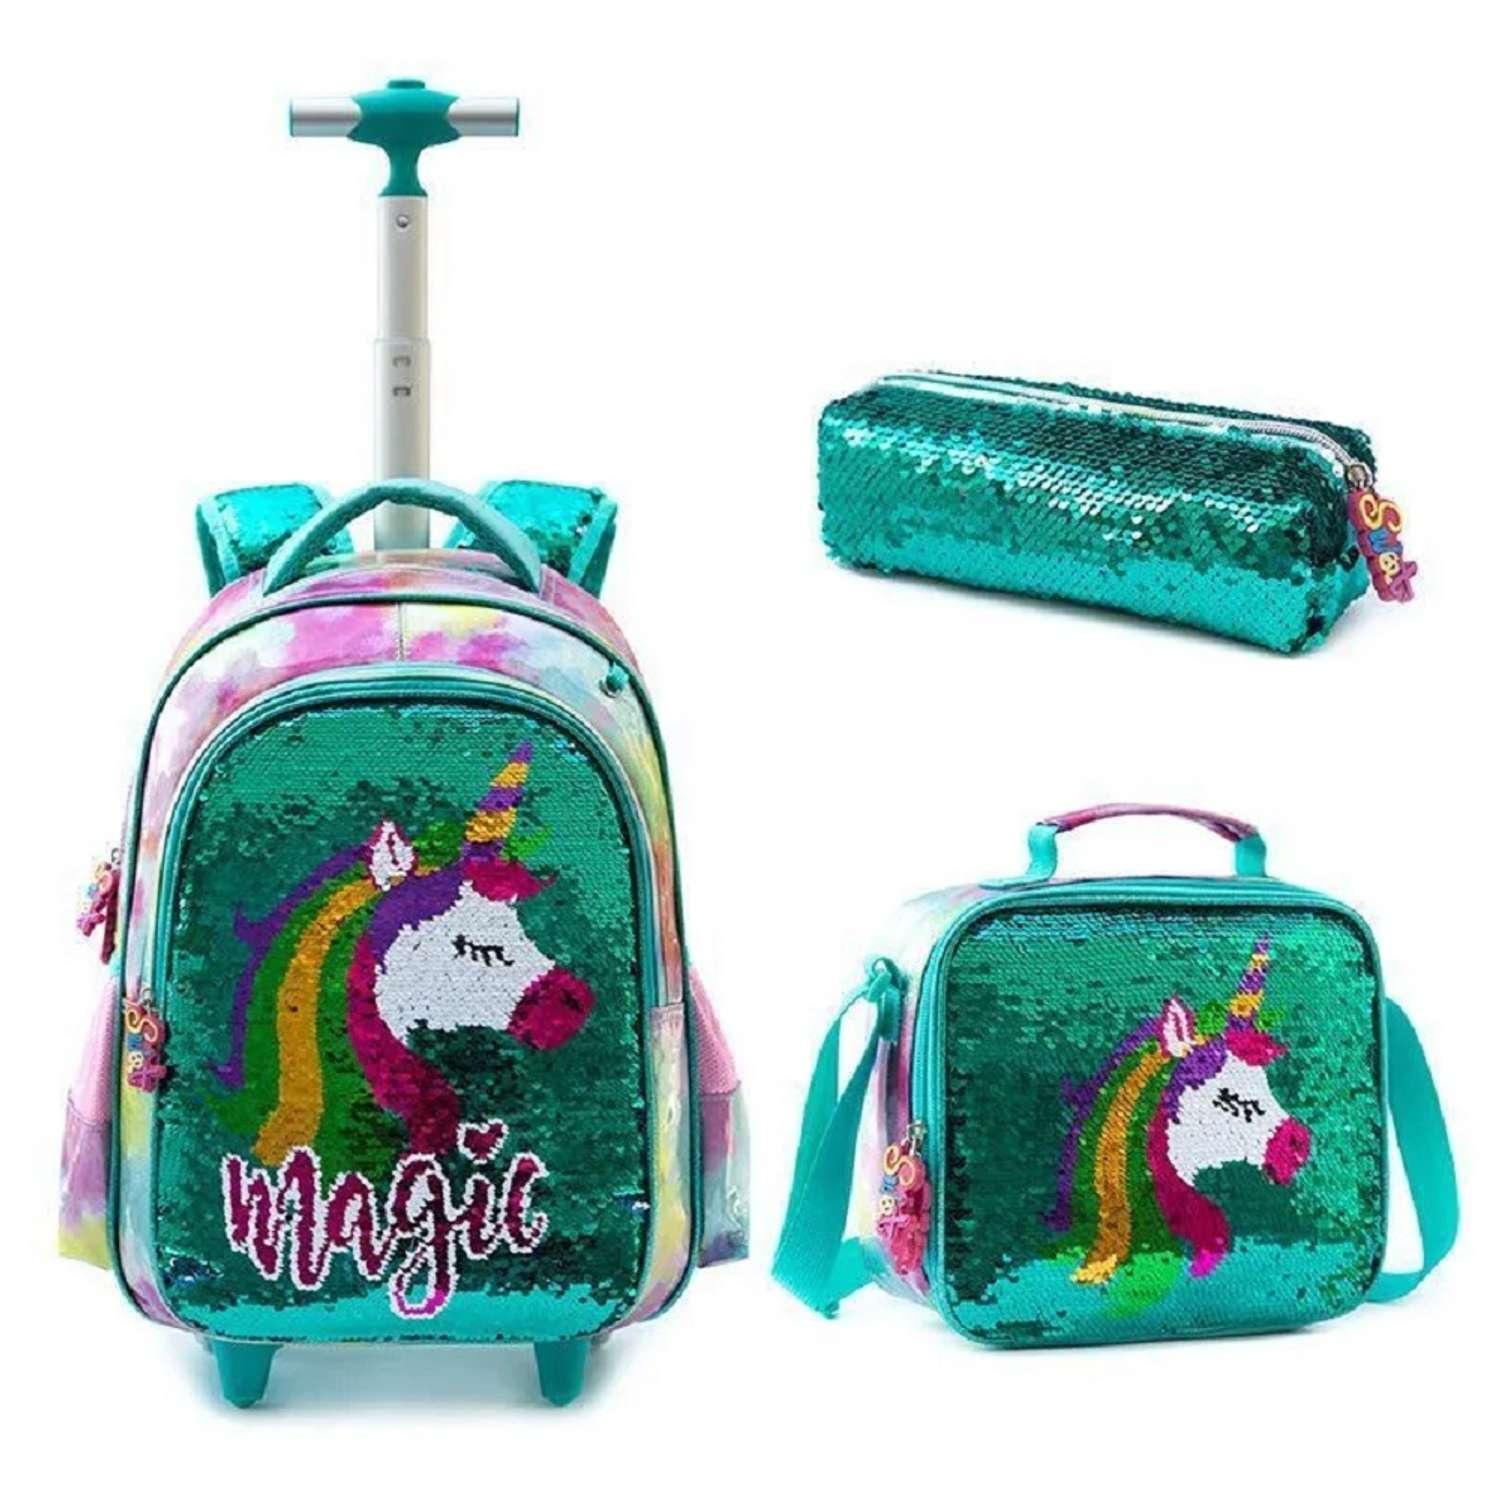 Рюкзак на колесах Jasminestar зеленый Magic с наполнением сумка+пенал - фото 2